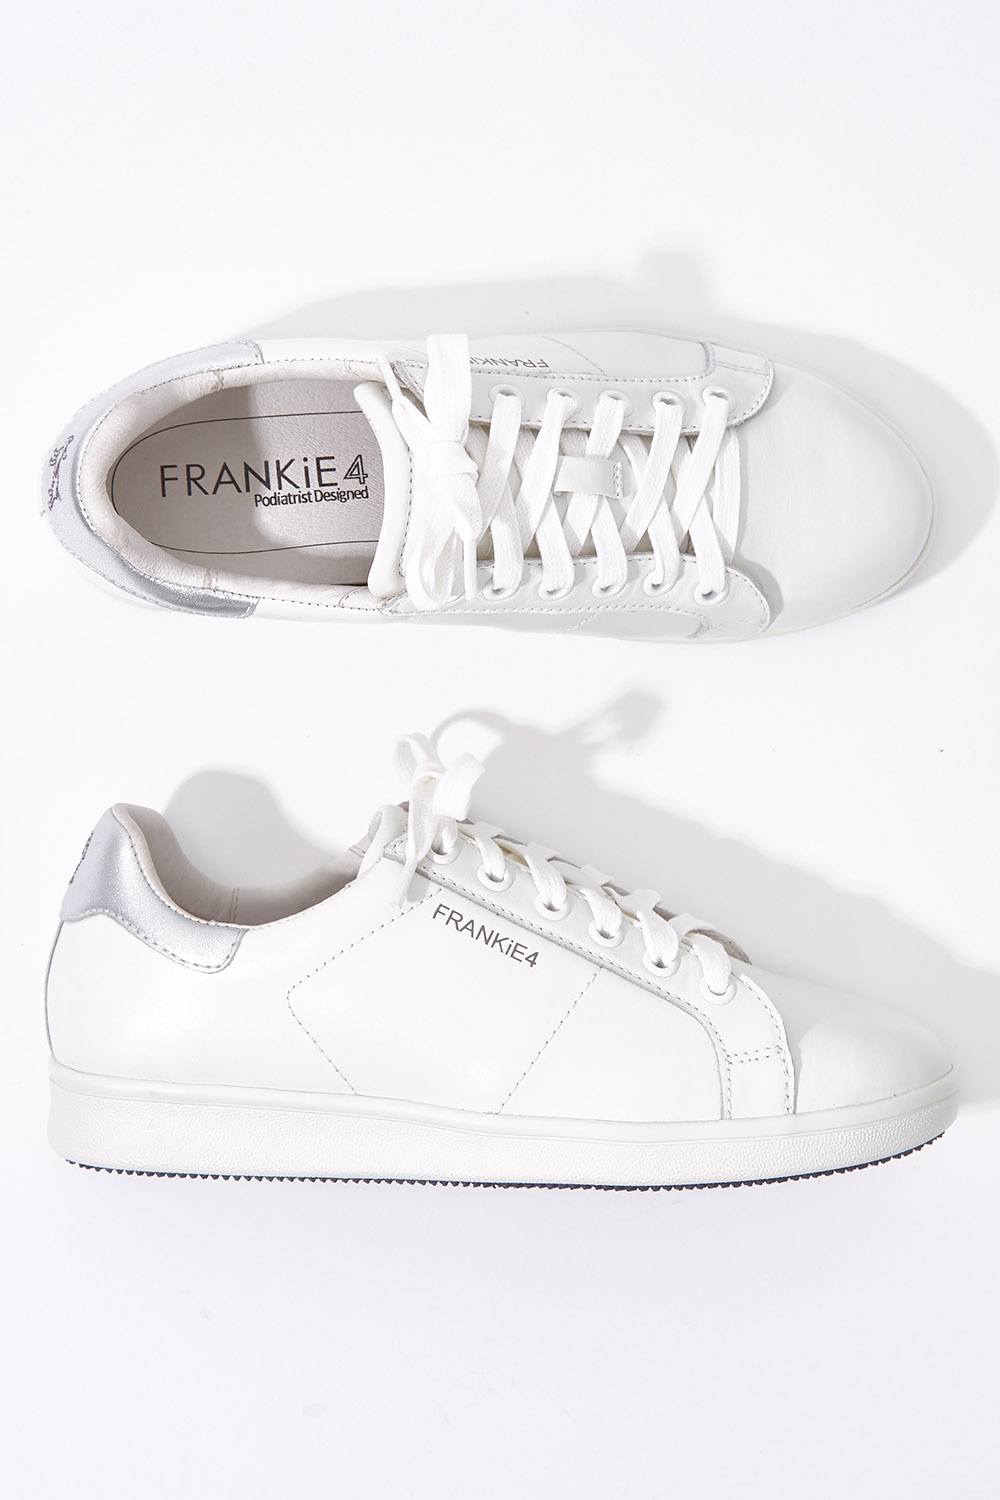 FRANKiE4 Jackie Sneaker - Womens Flats 